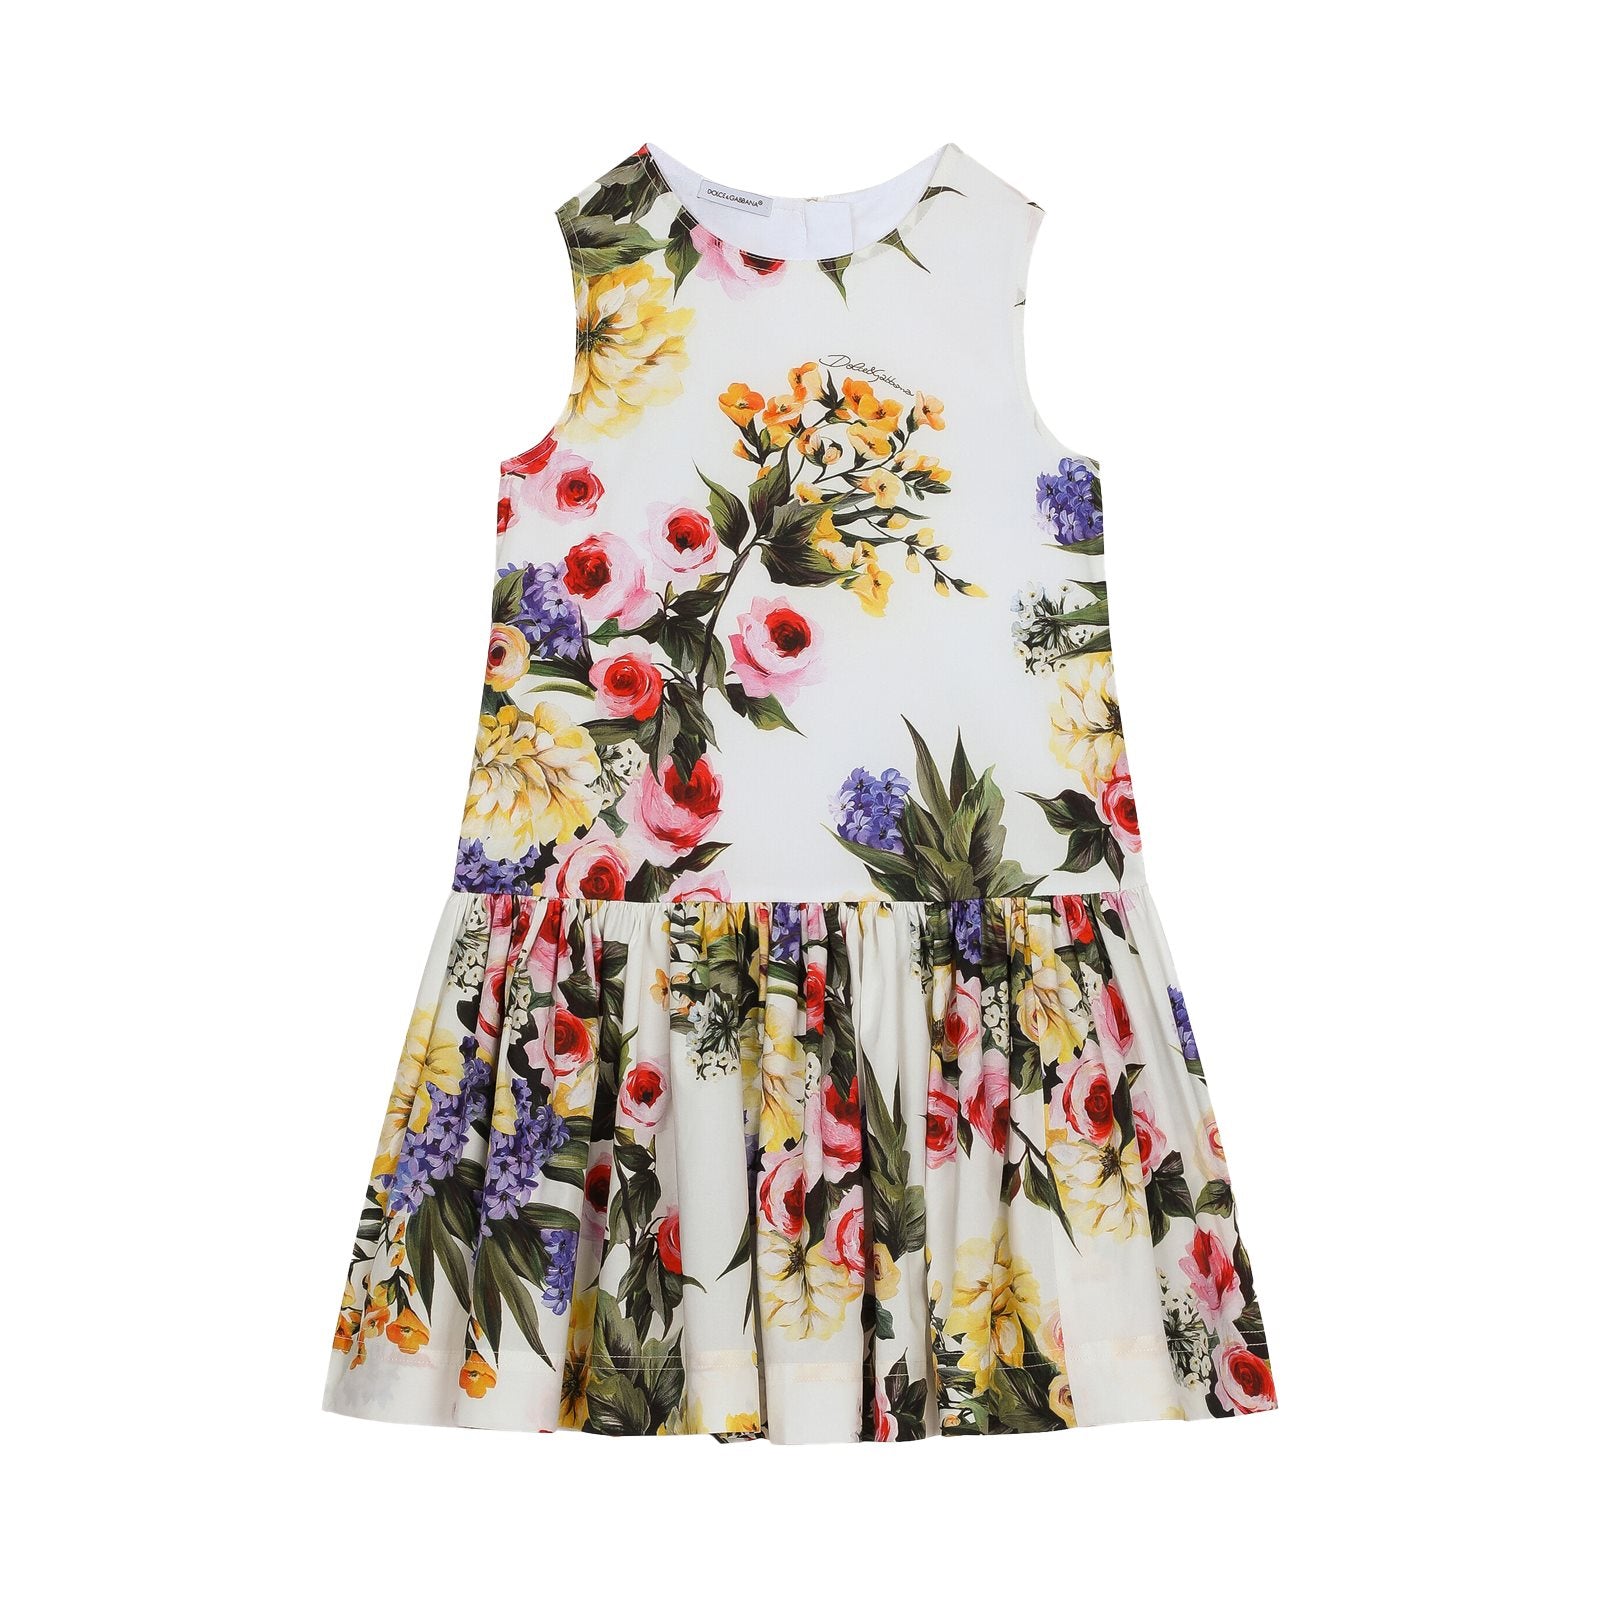 All-over garden poplin dress